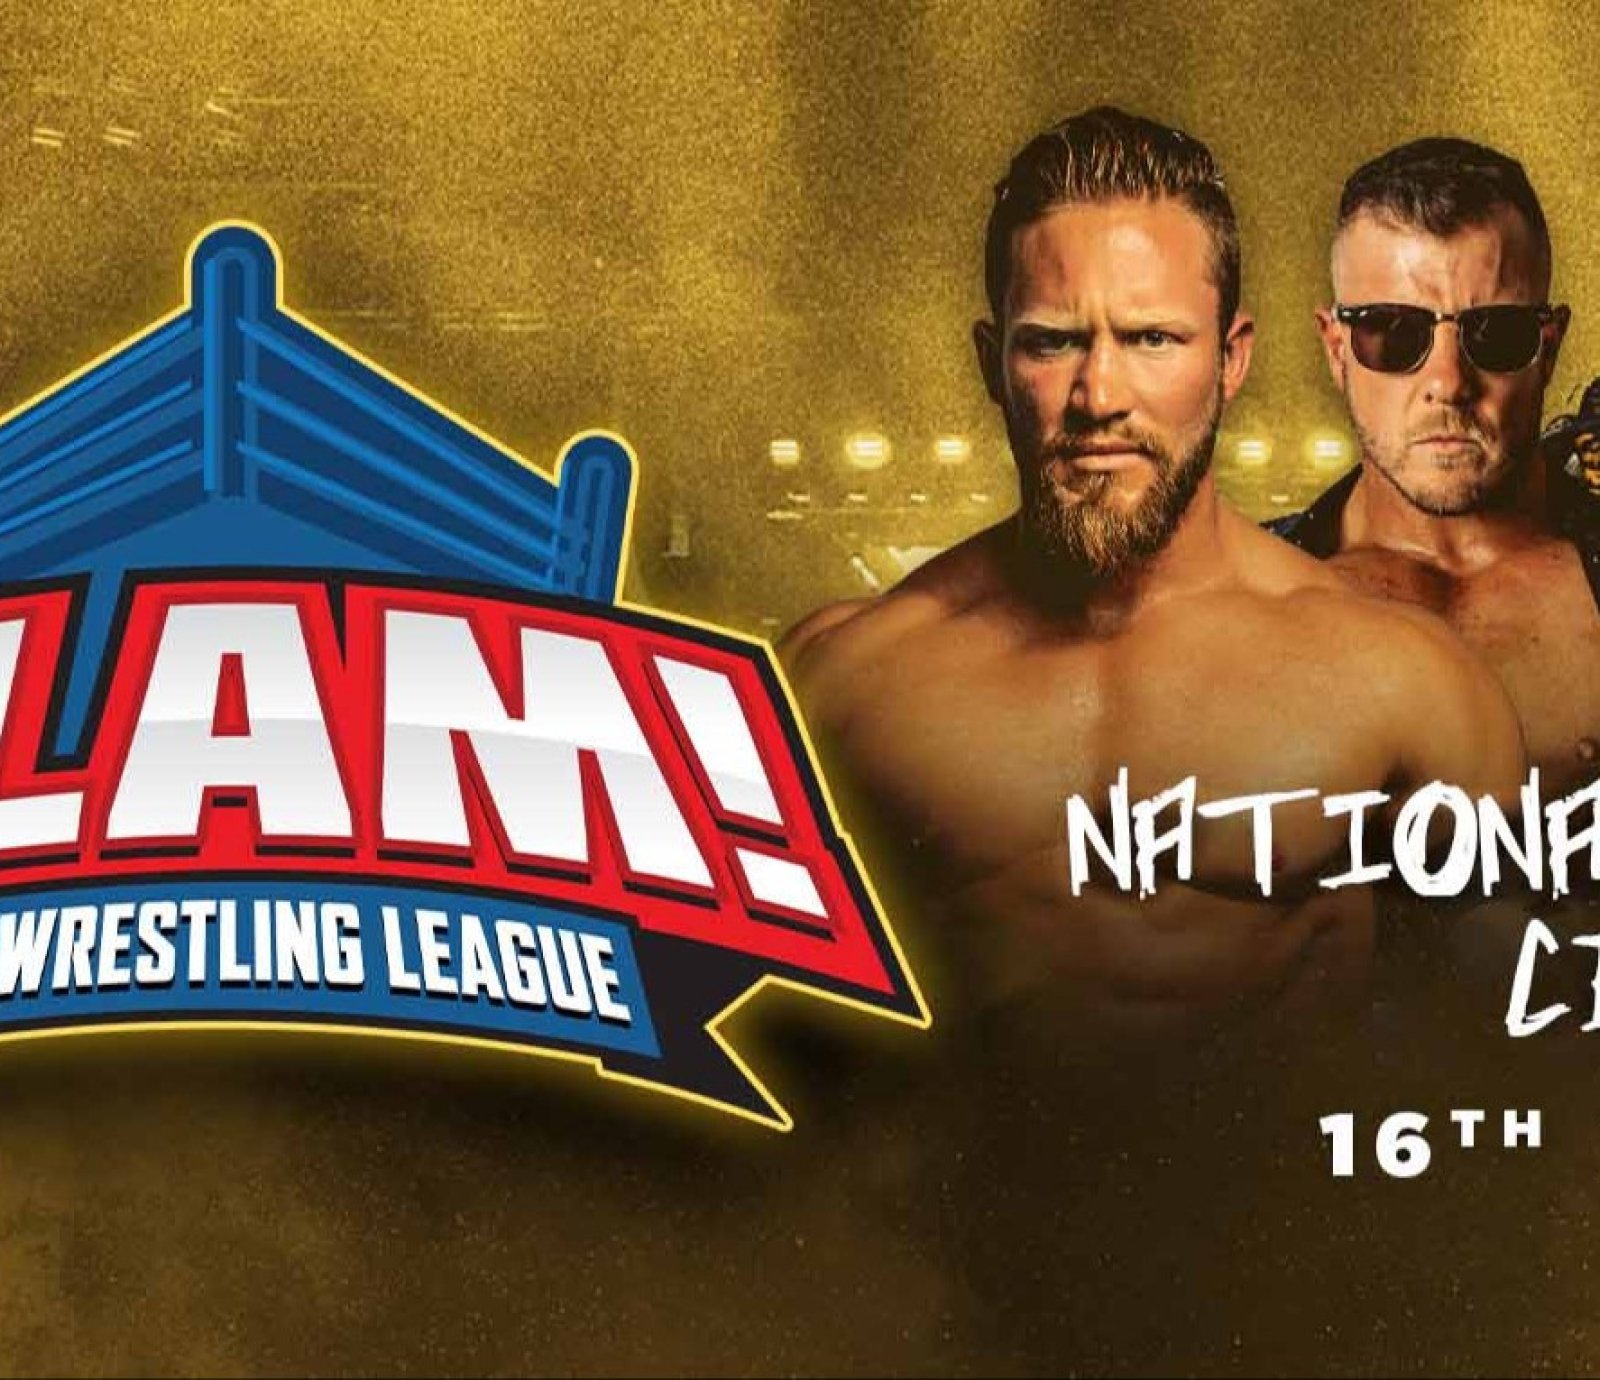 SLAM! Pro Wrestling League